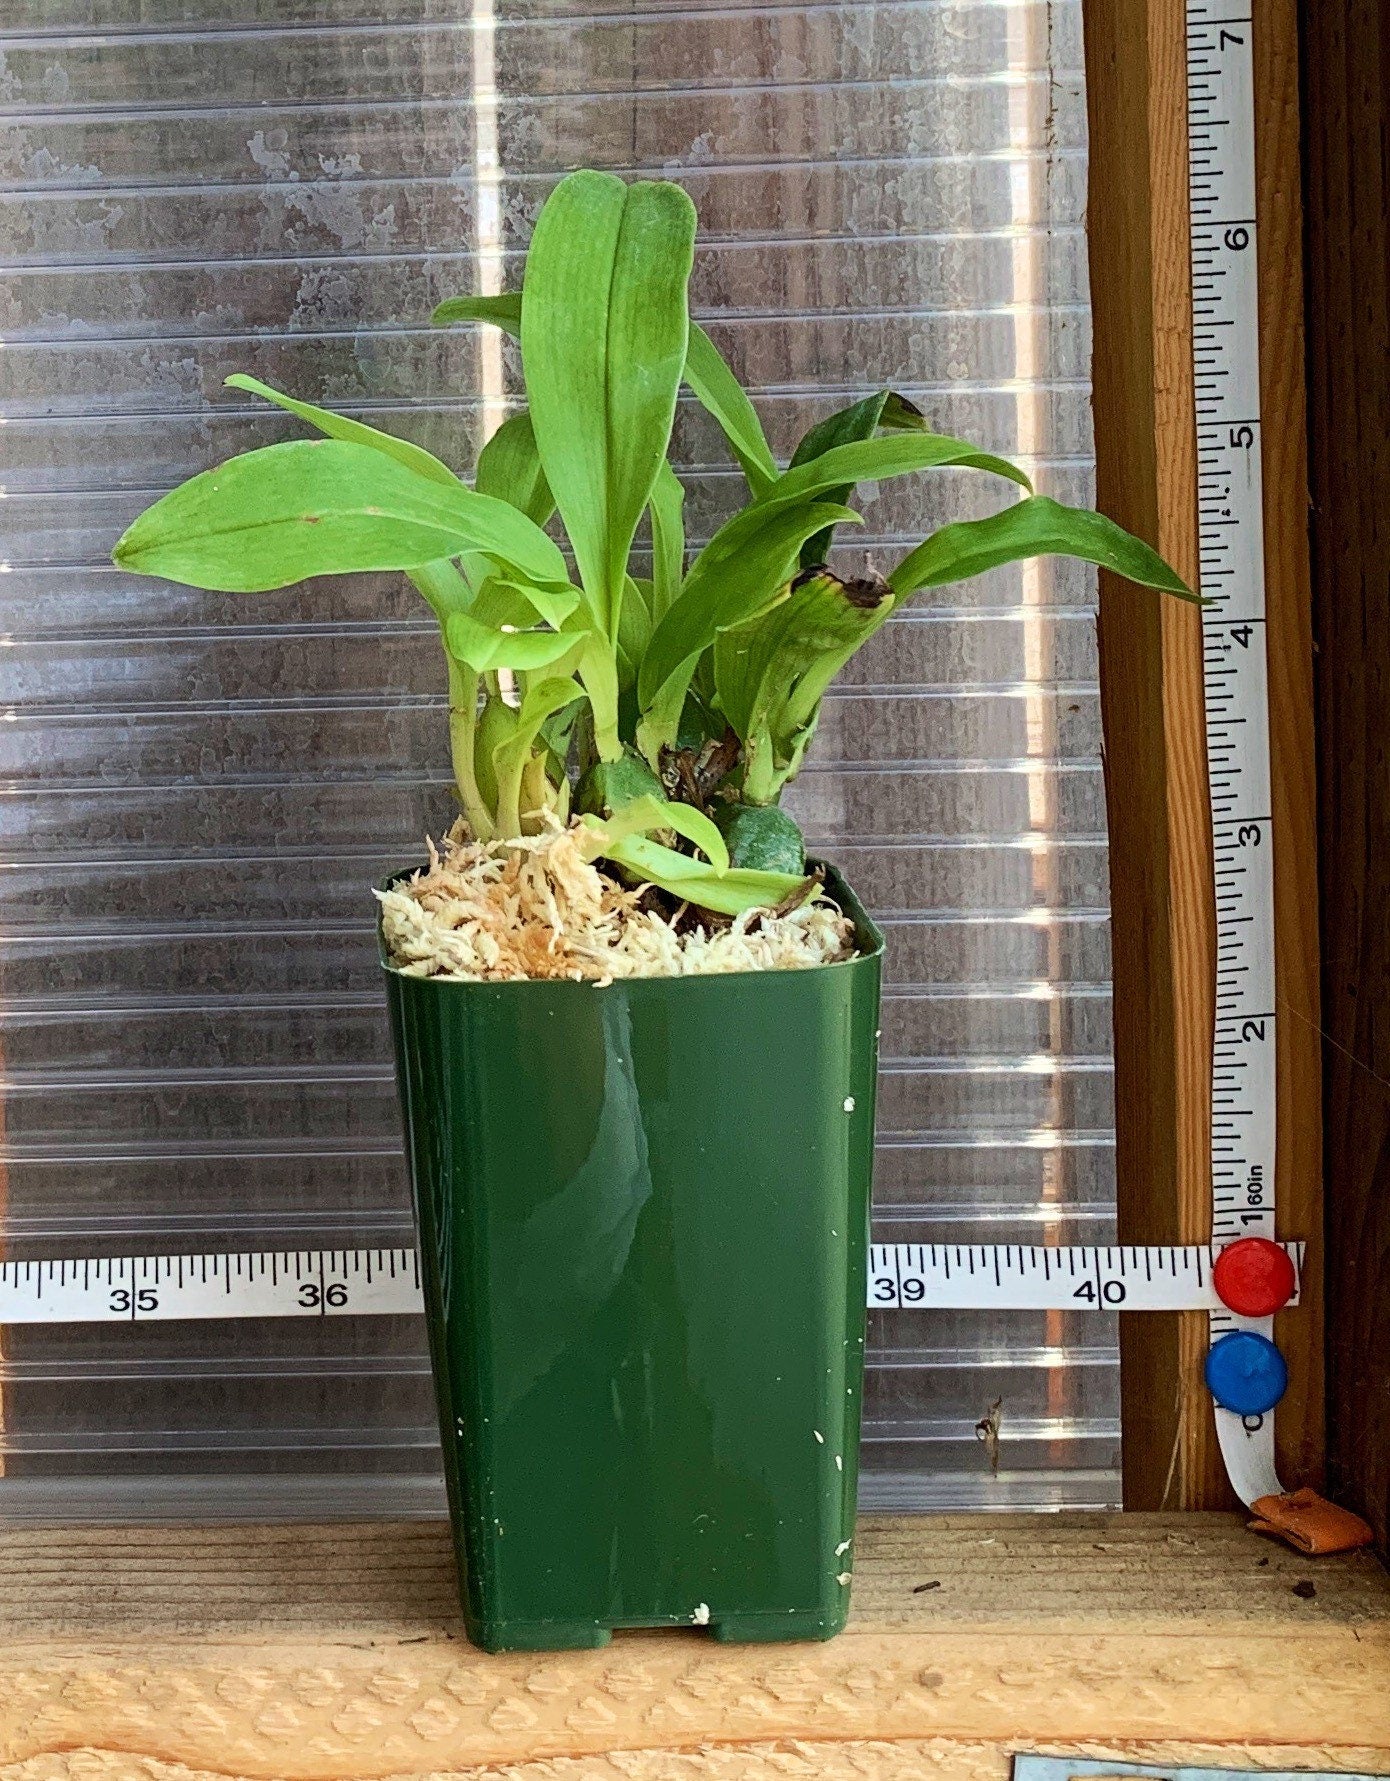 Fragrant miniature orchid/ rare find/ Promenaea xanthina/ 2 1/2” pot